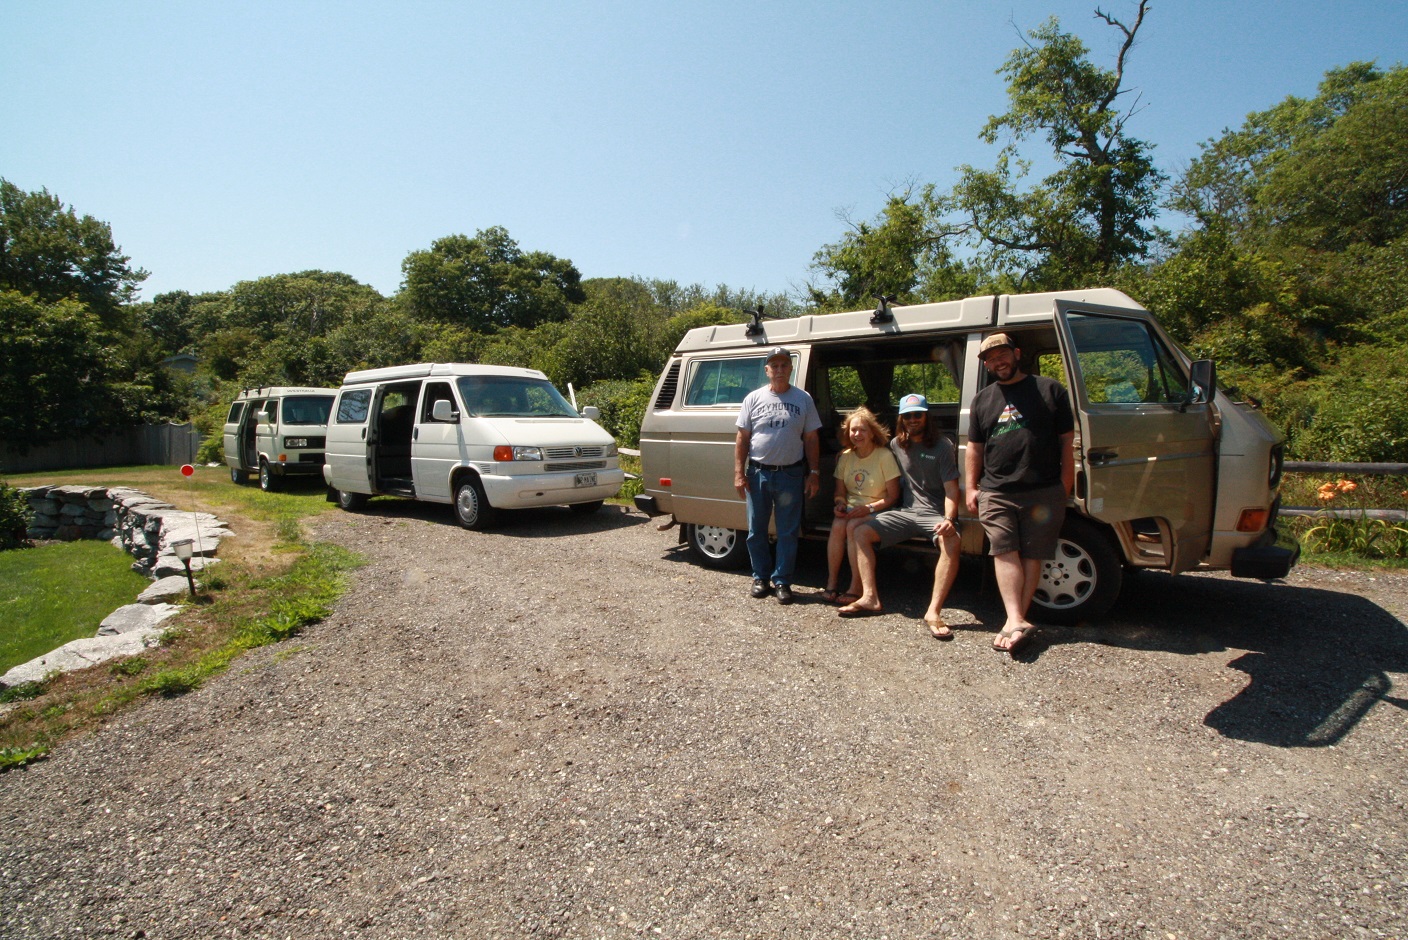 Bridget's Wedding Safari - 7 Vans